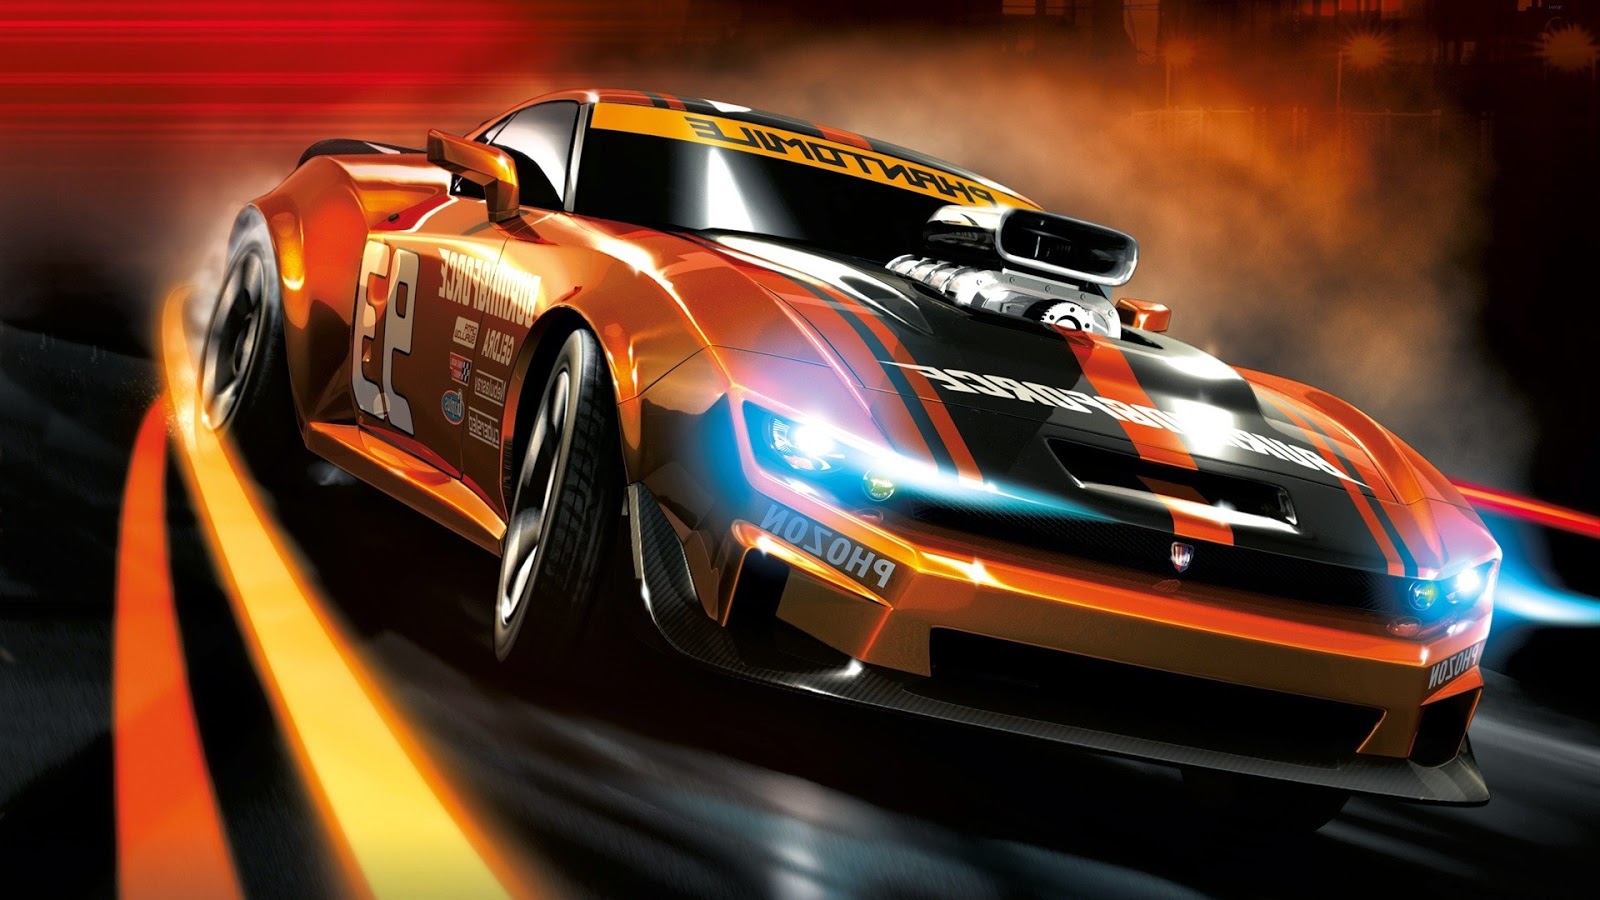 Cool Racing Cars For Wallpaper Race Car